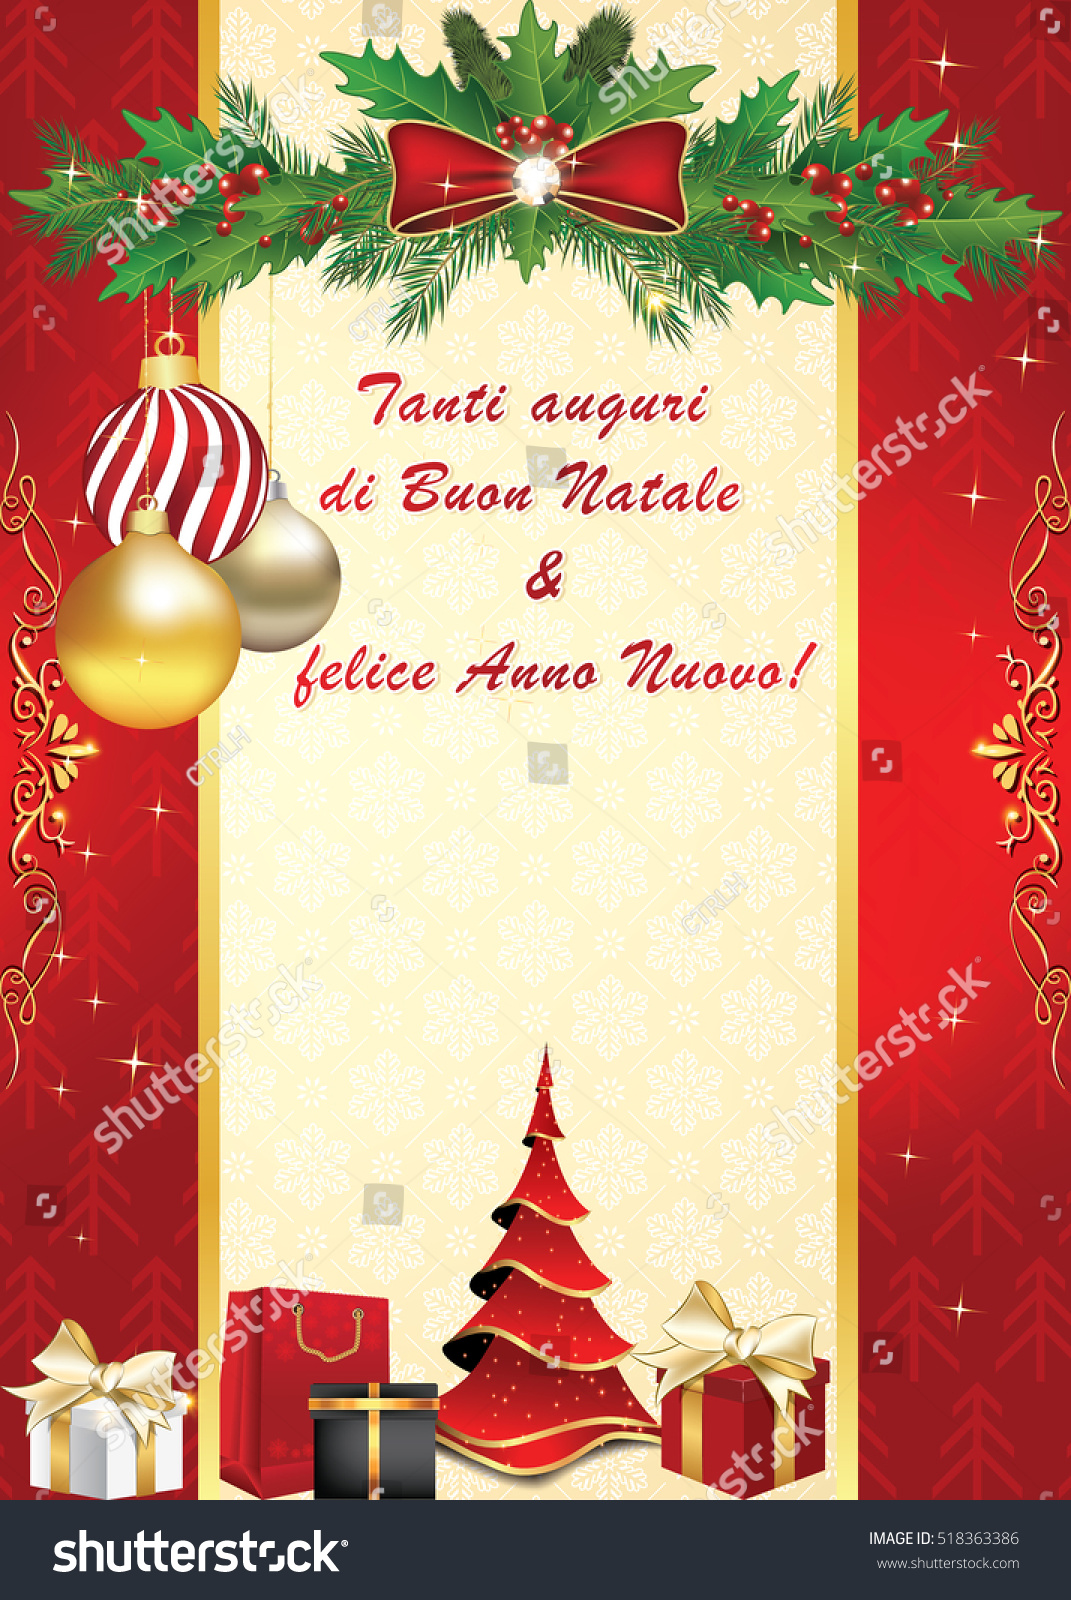 Auguri Di Buon Natale We Wish.We Wish You Merry Christmas Happy Stock Illustration 518363386